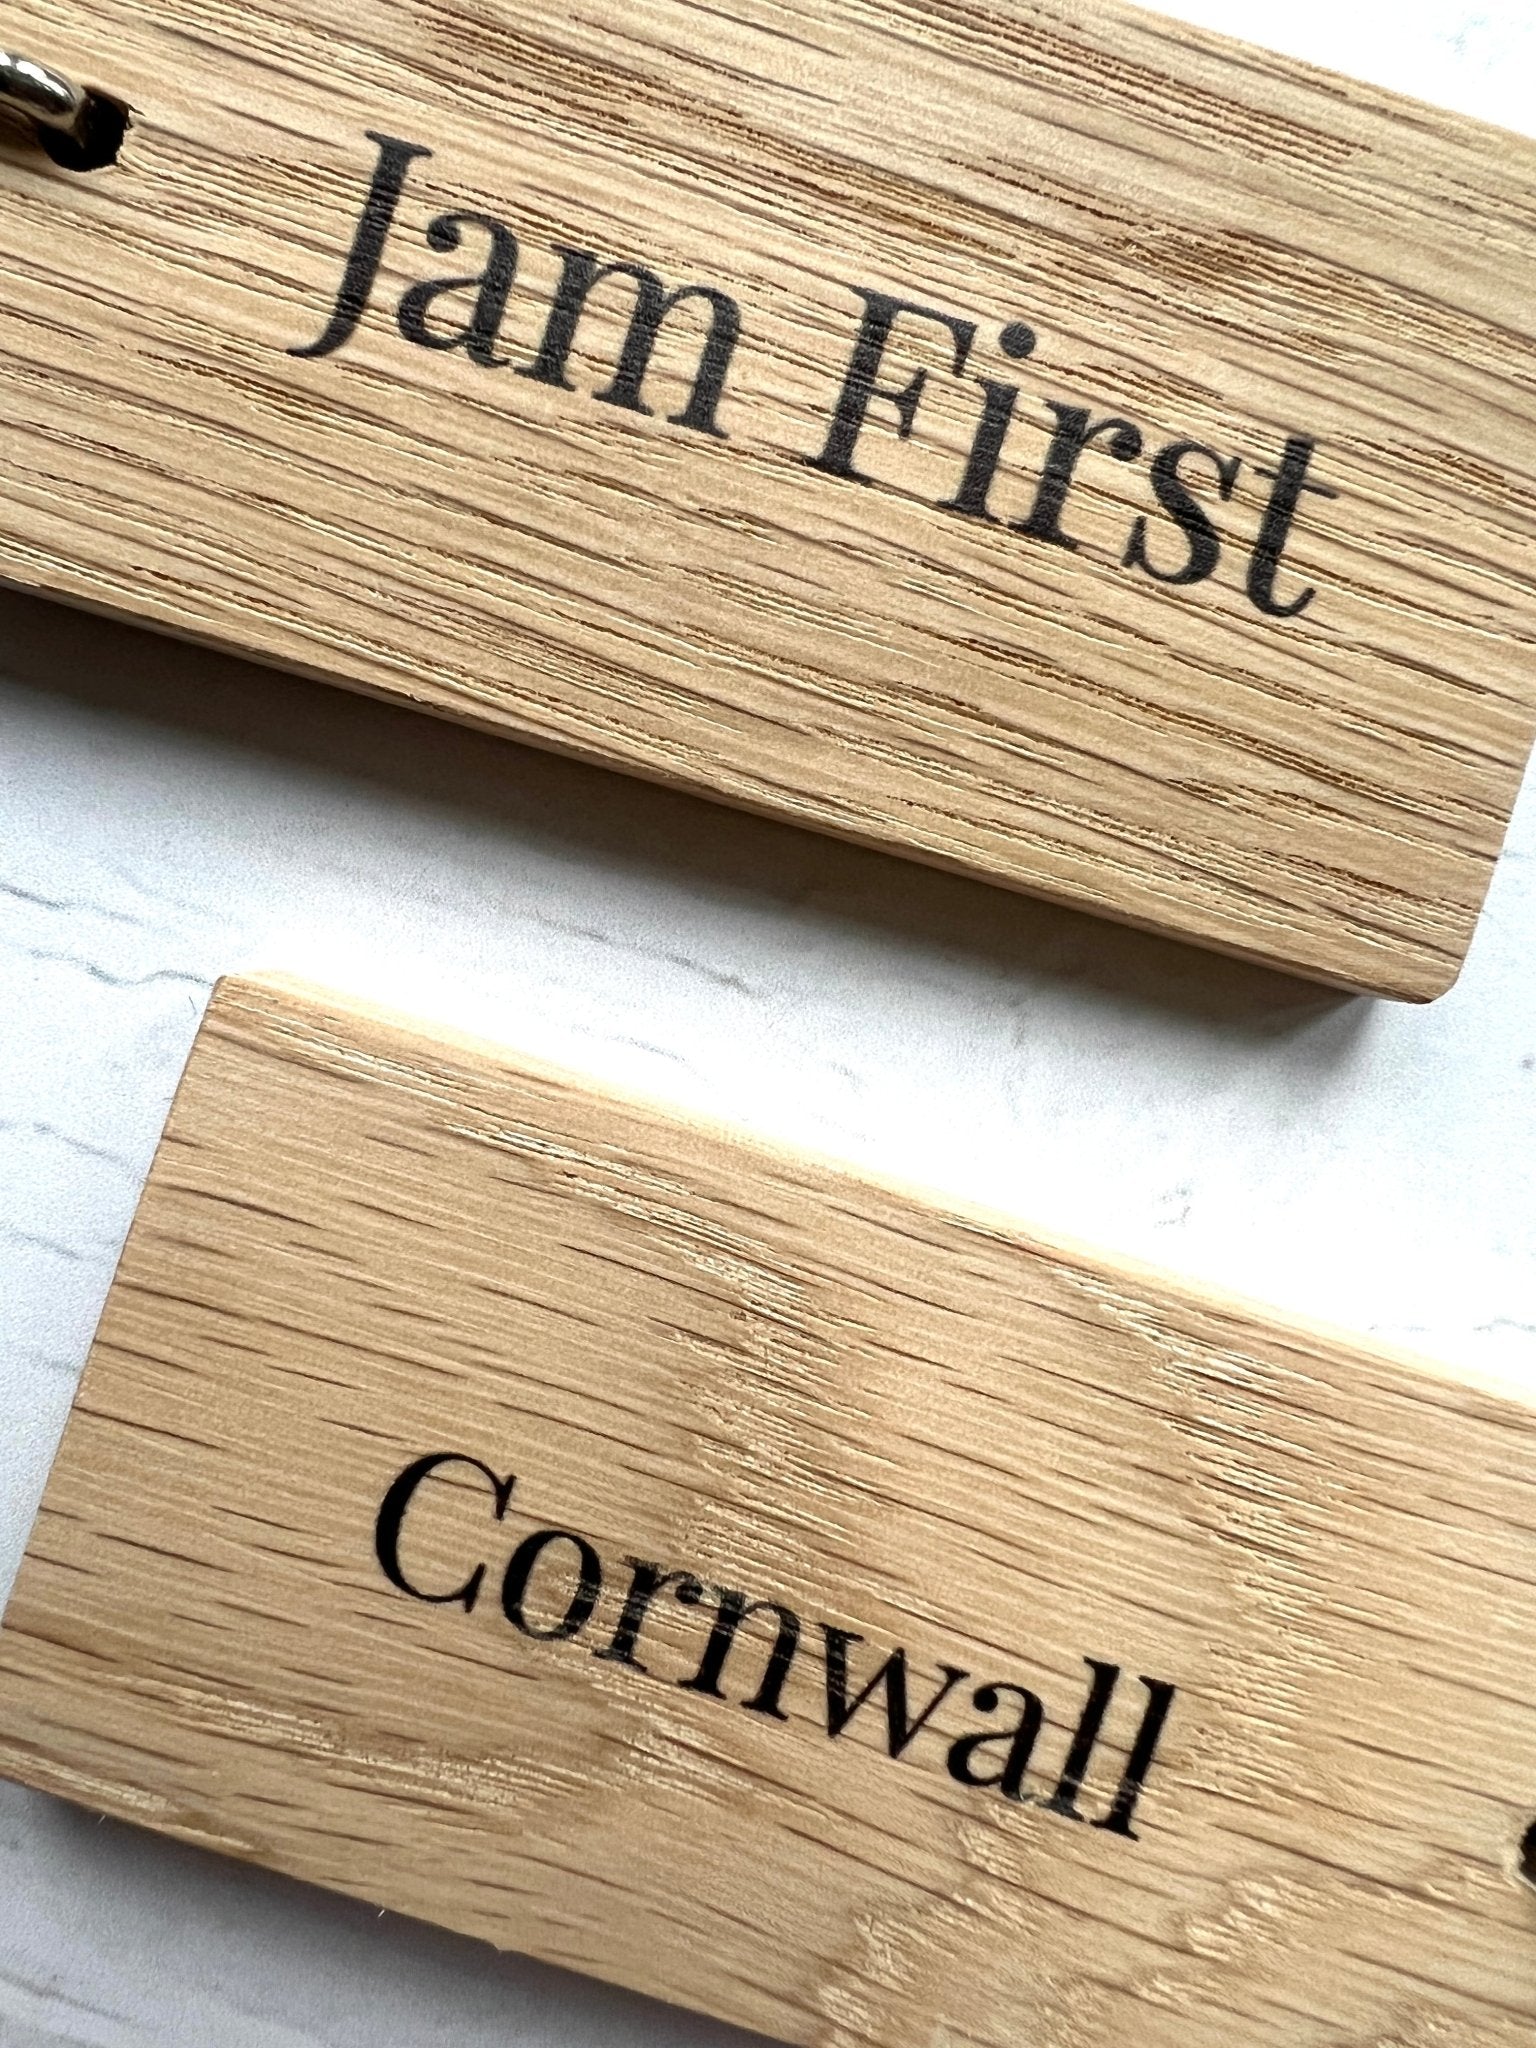 Jam First Cornwall Key Ring - Readymoney Beach Shop